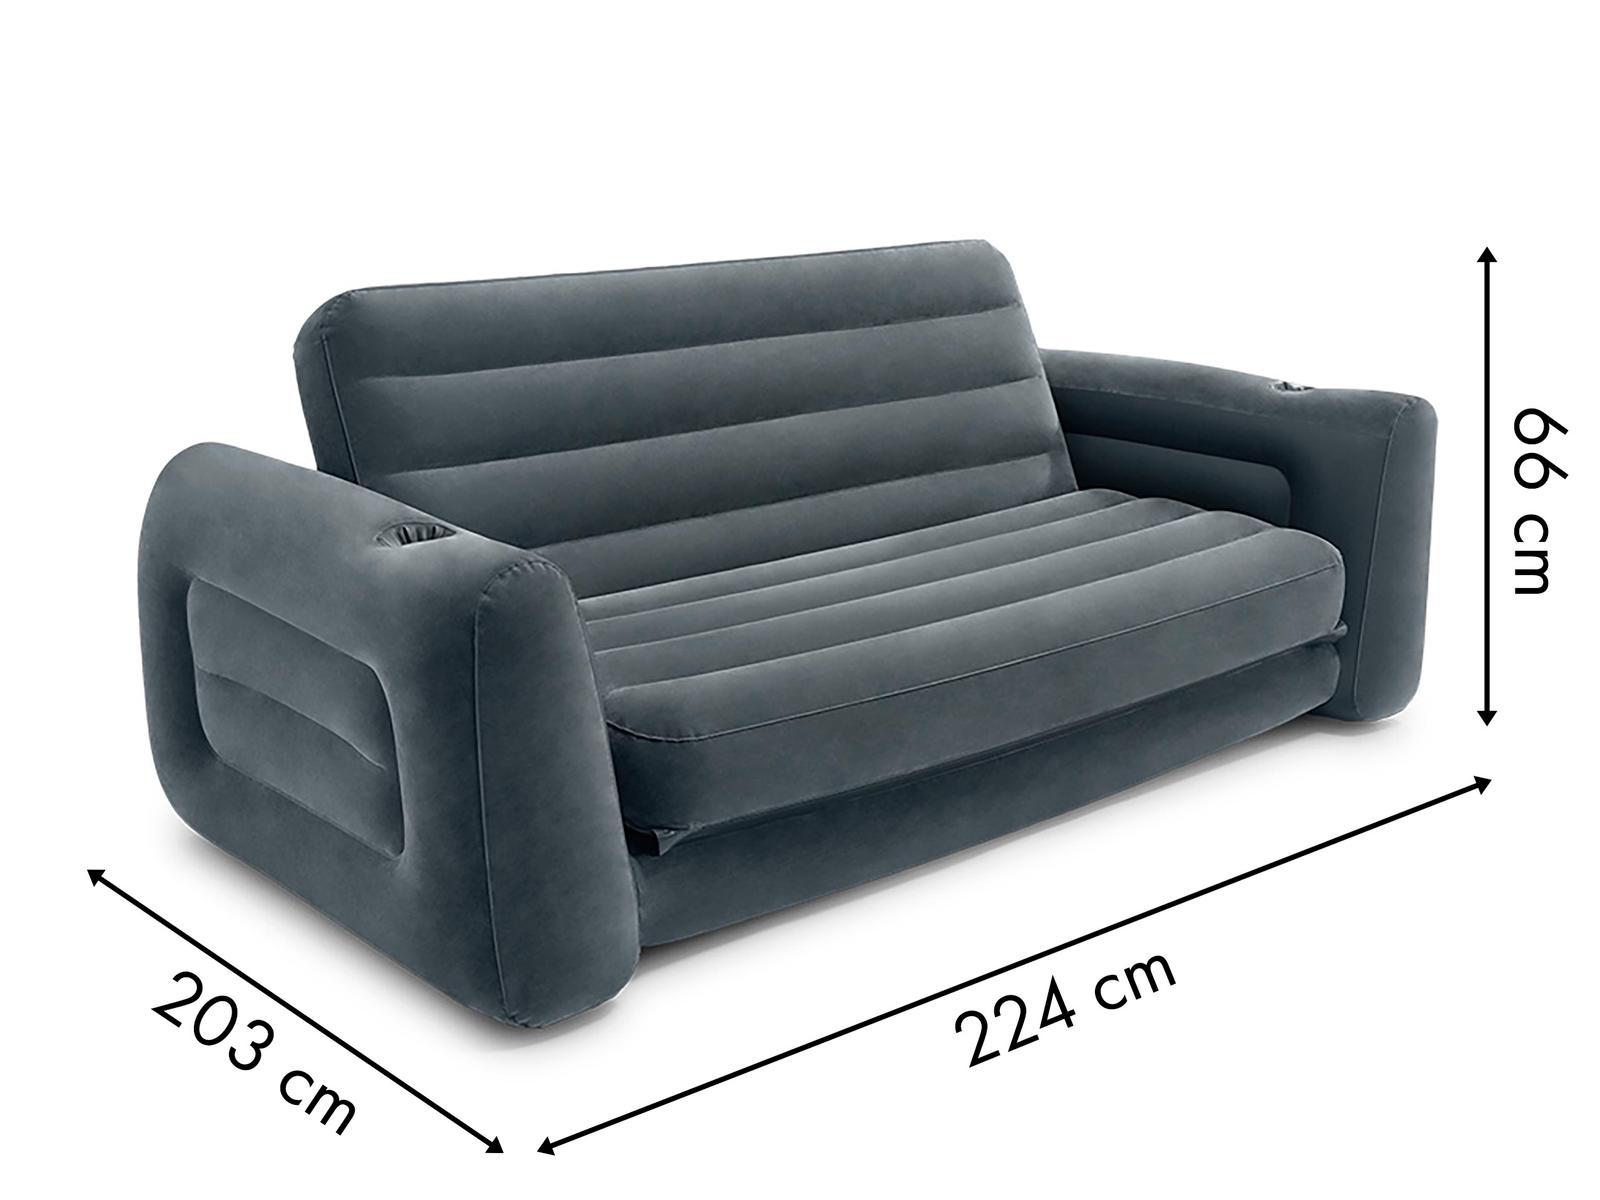 Sofa dmuchana rozkładana łóżko materac 2w1 INTEX 66552 4 Full Screen